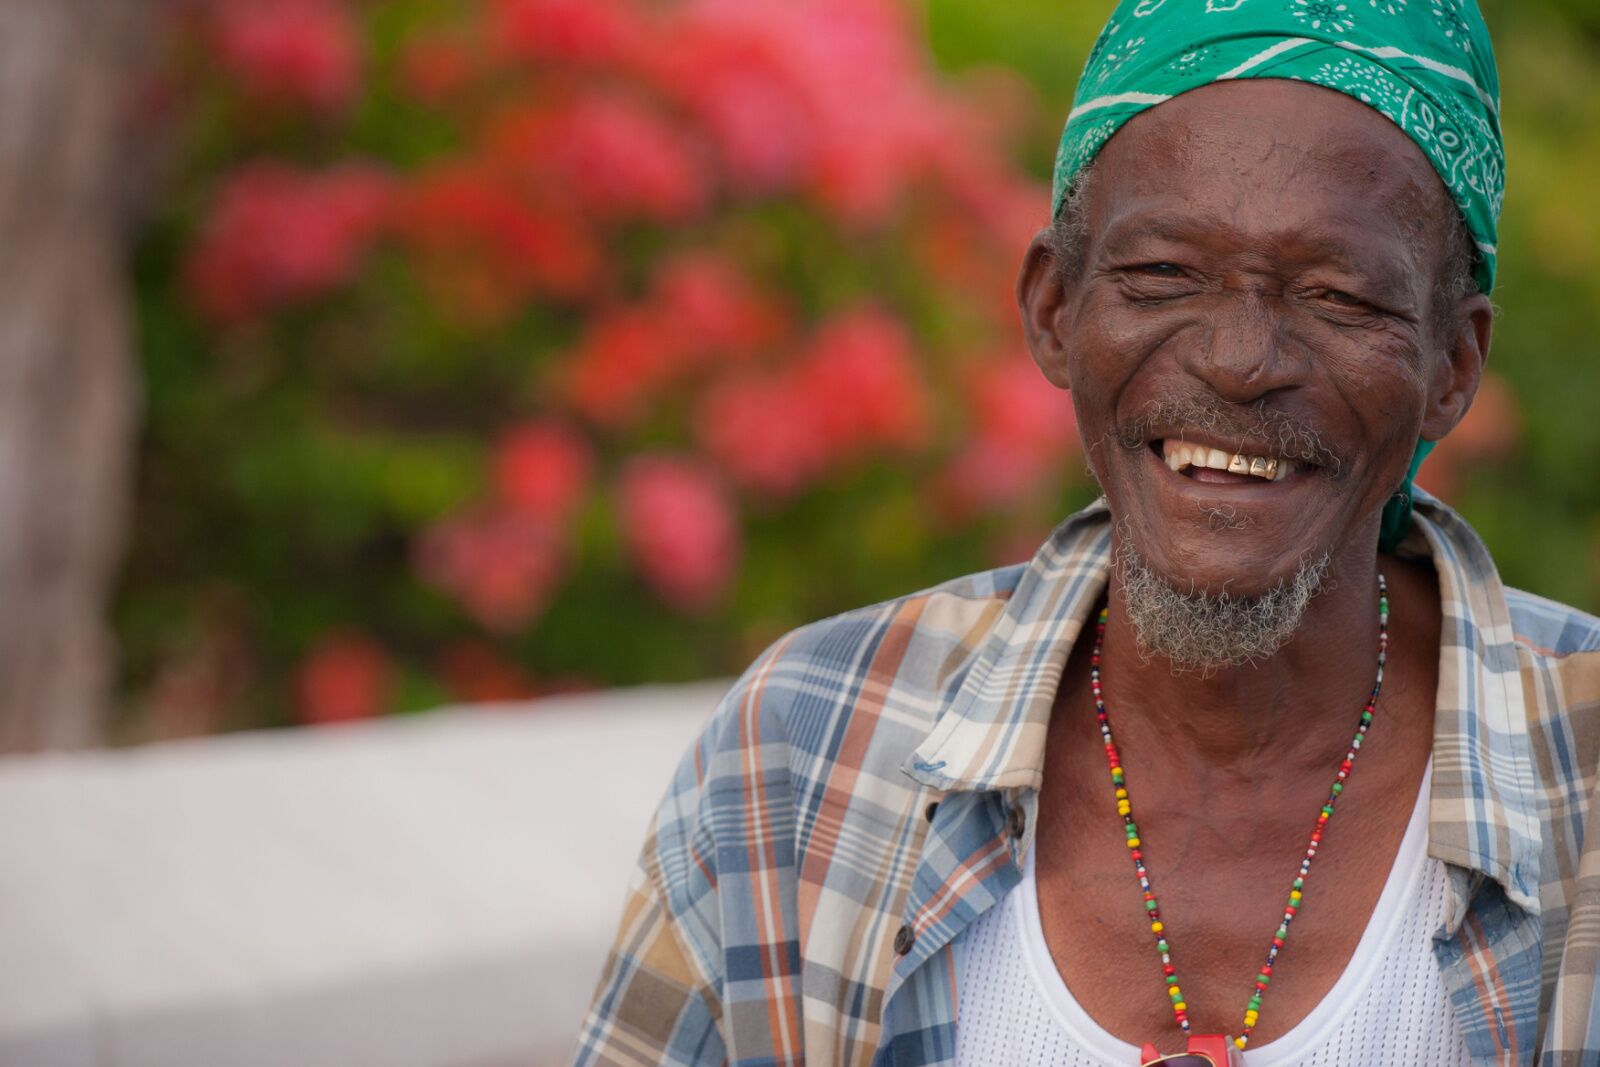 A close up portrait of a Rastafari man in Jamaica's blue mountains